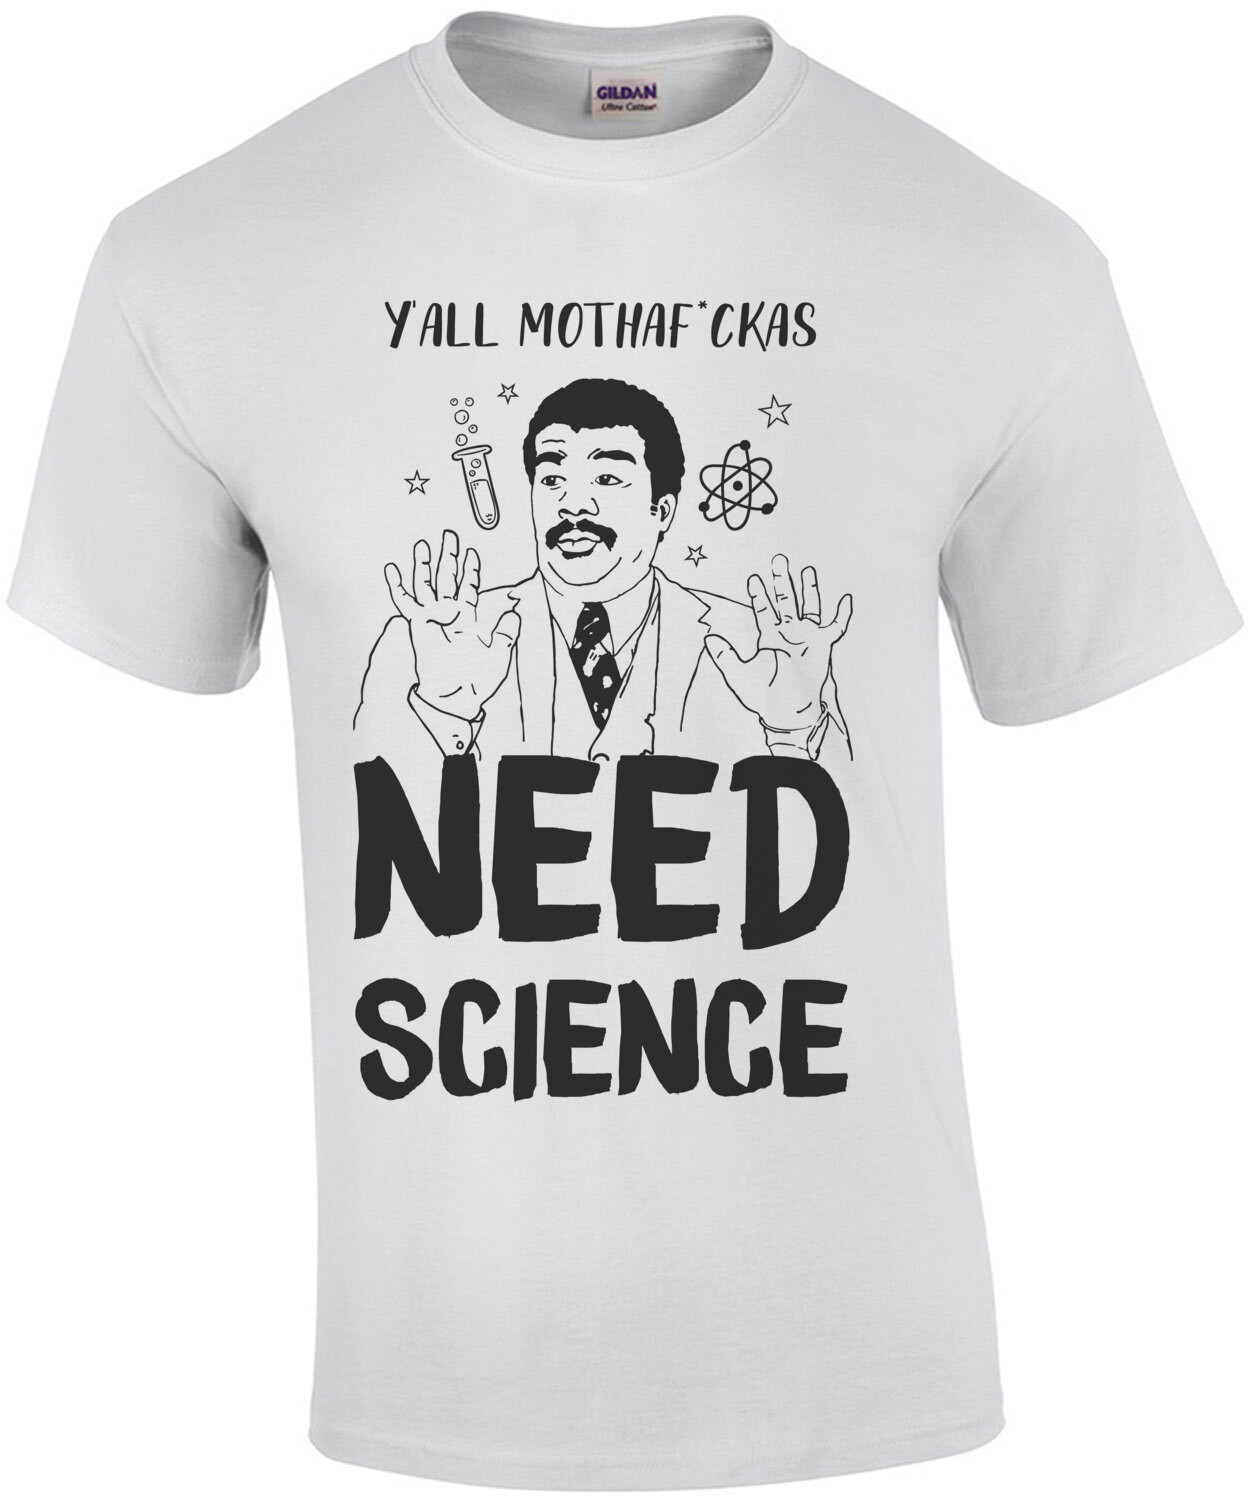 Yall mothaf#ckas need science - neil degrasse tyson t-shirt